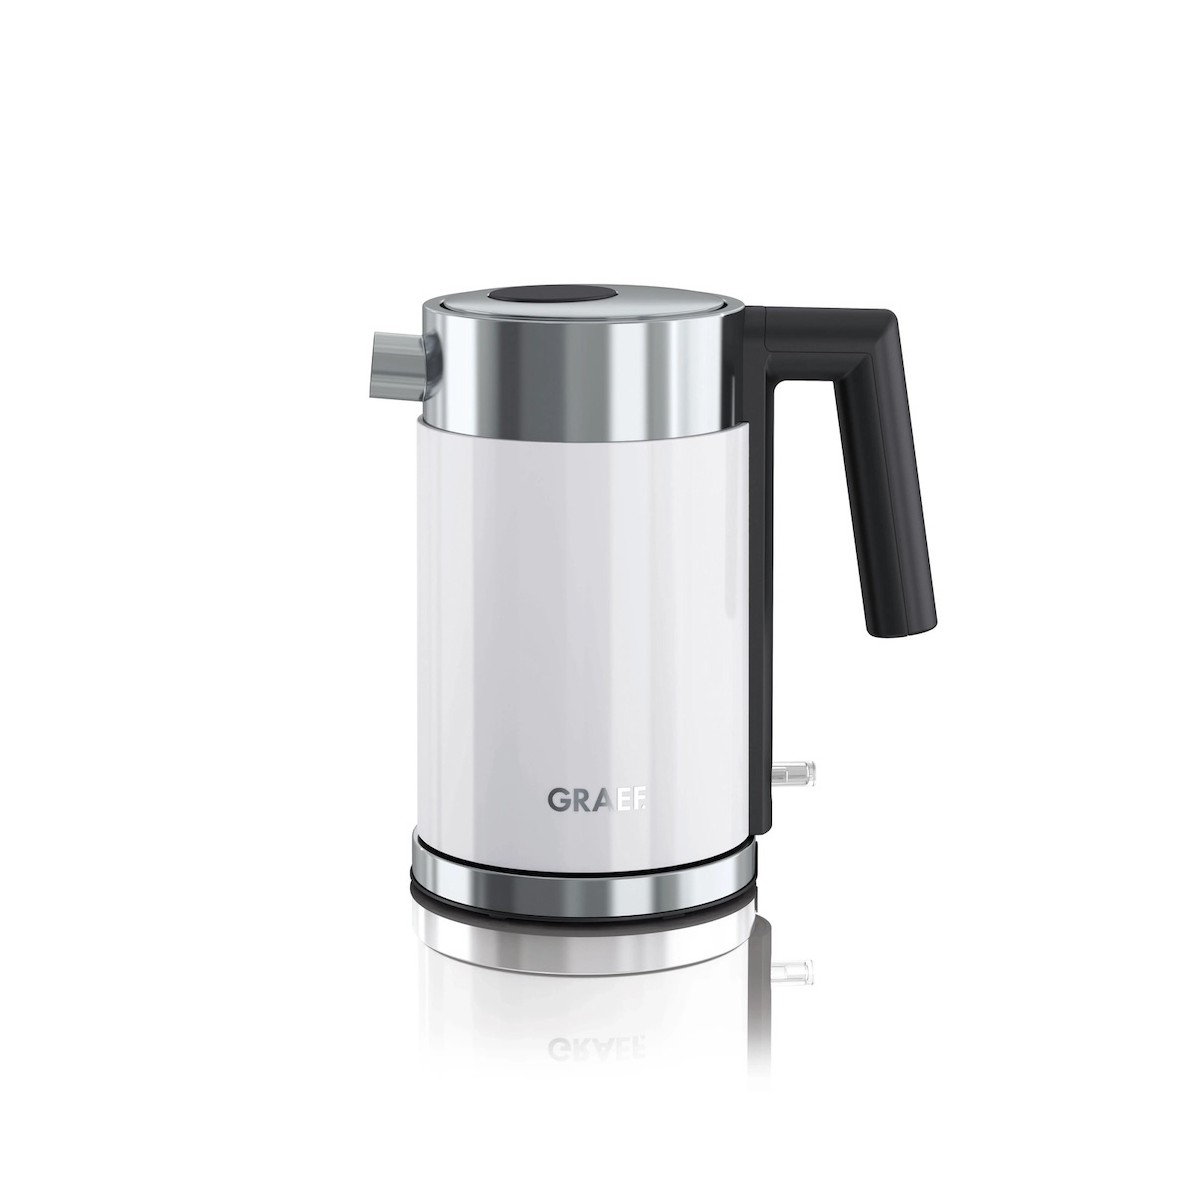 GRAEF WK401 electric kettle - white